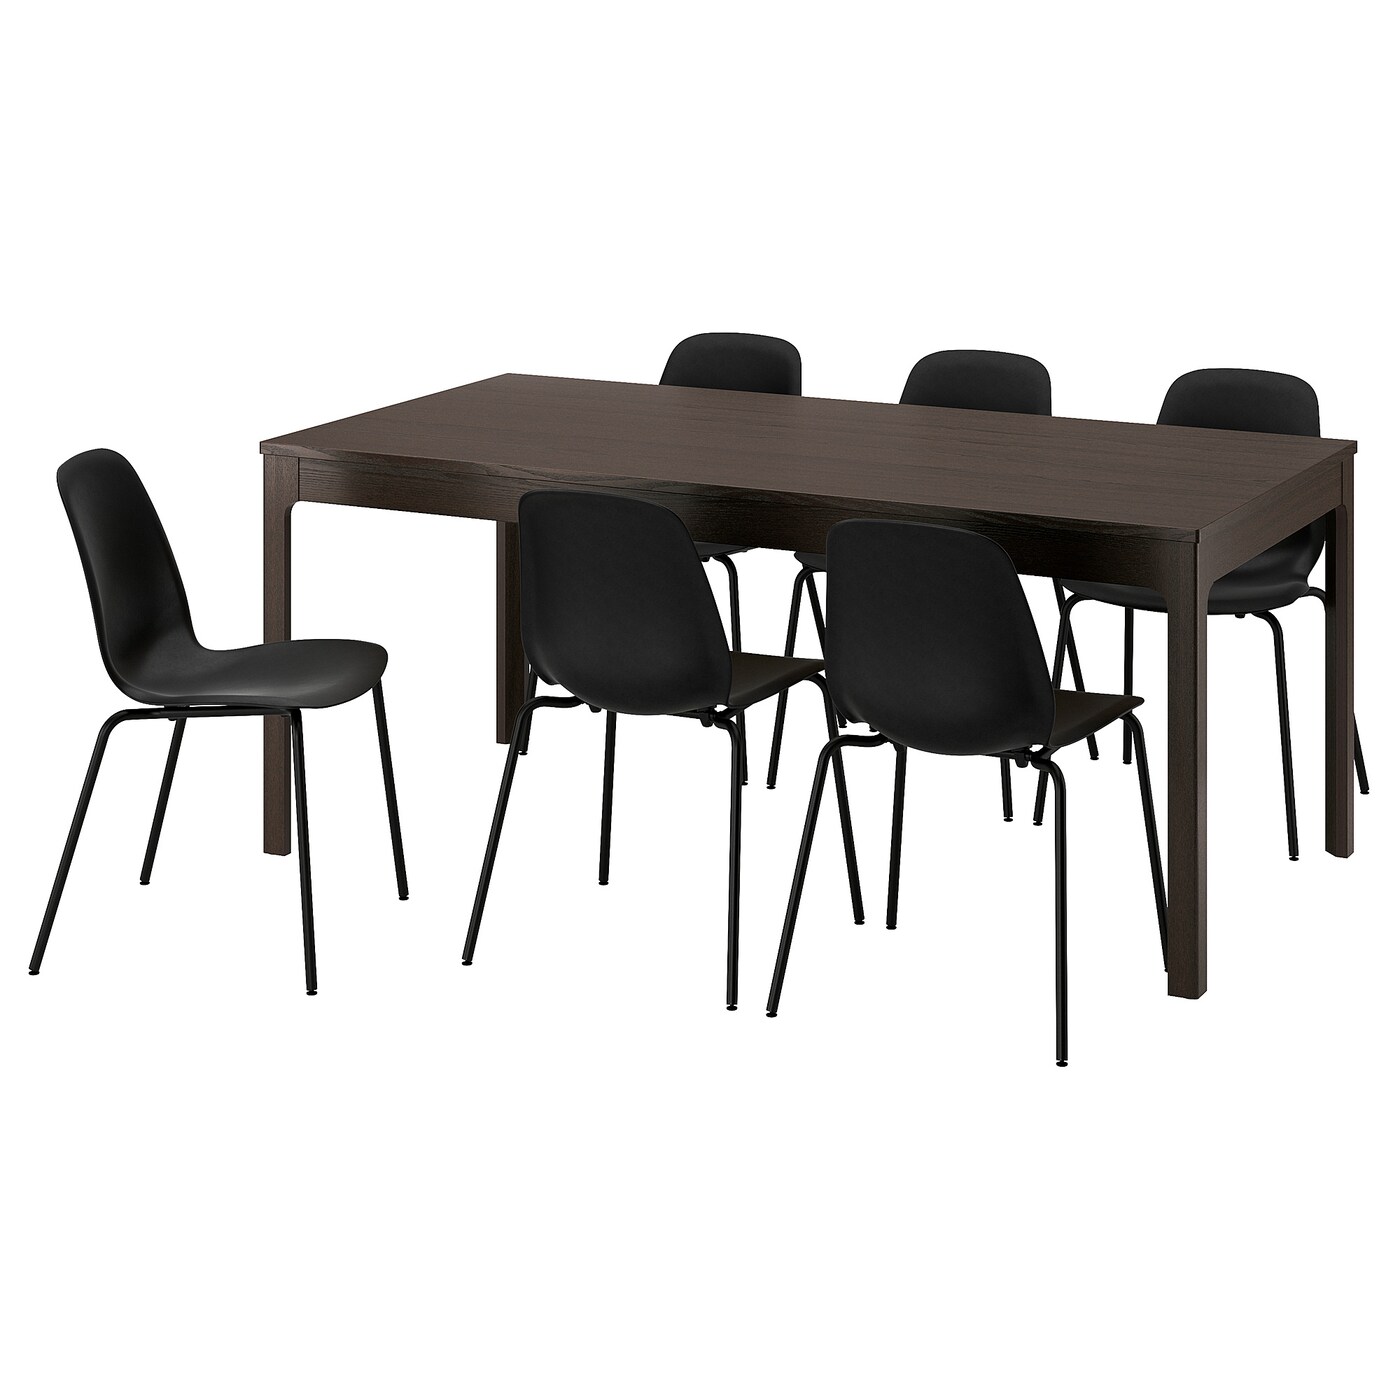 EKEDALEN / LIDÅS Стол и 6 стульев ИКЕА